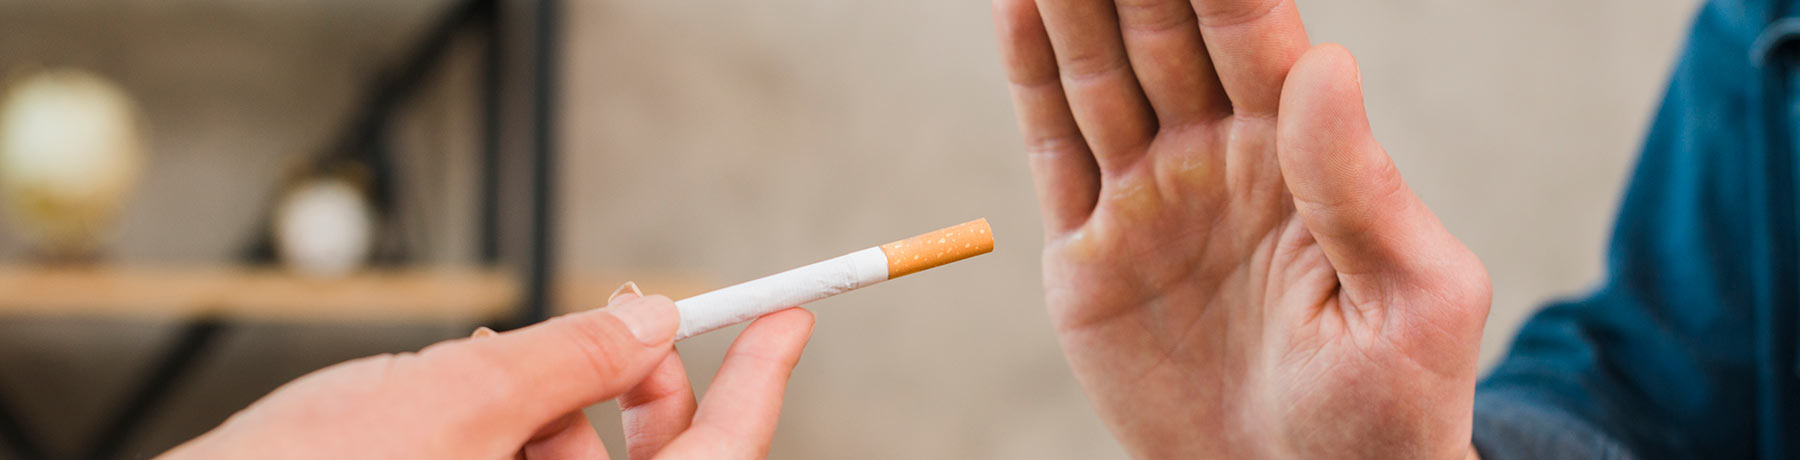 northwest arkansas smoking cessation programs